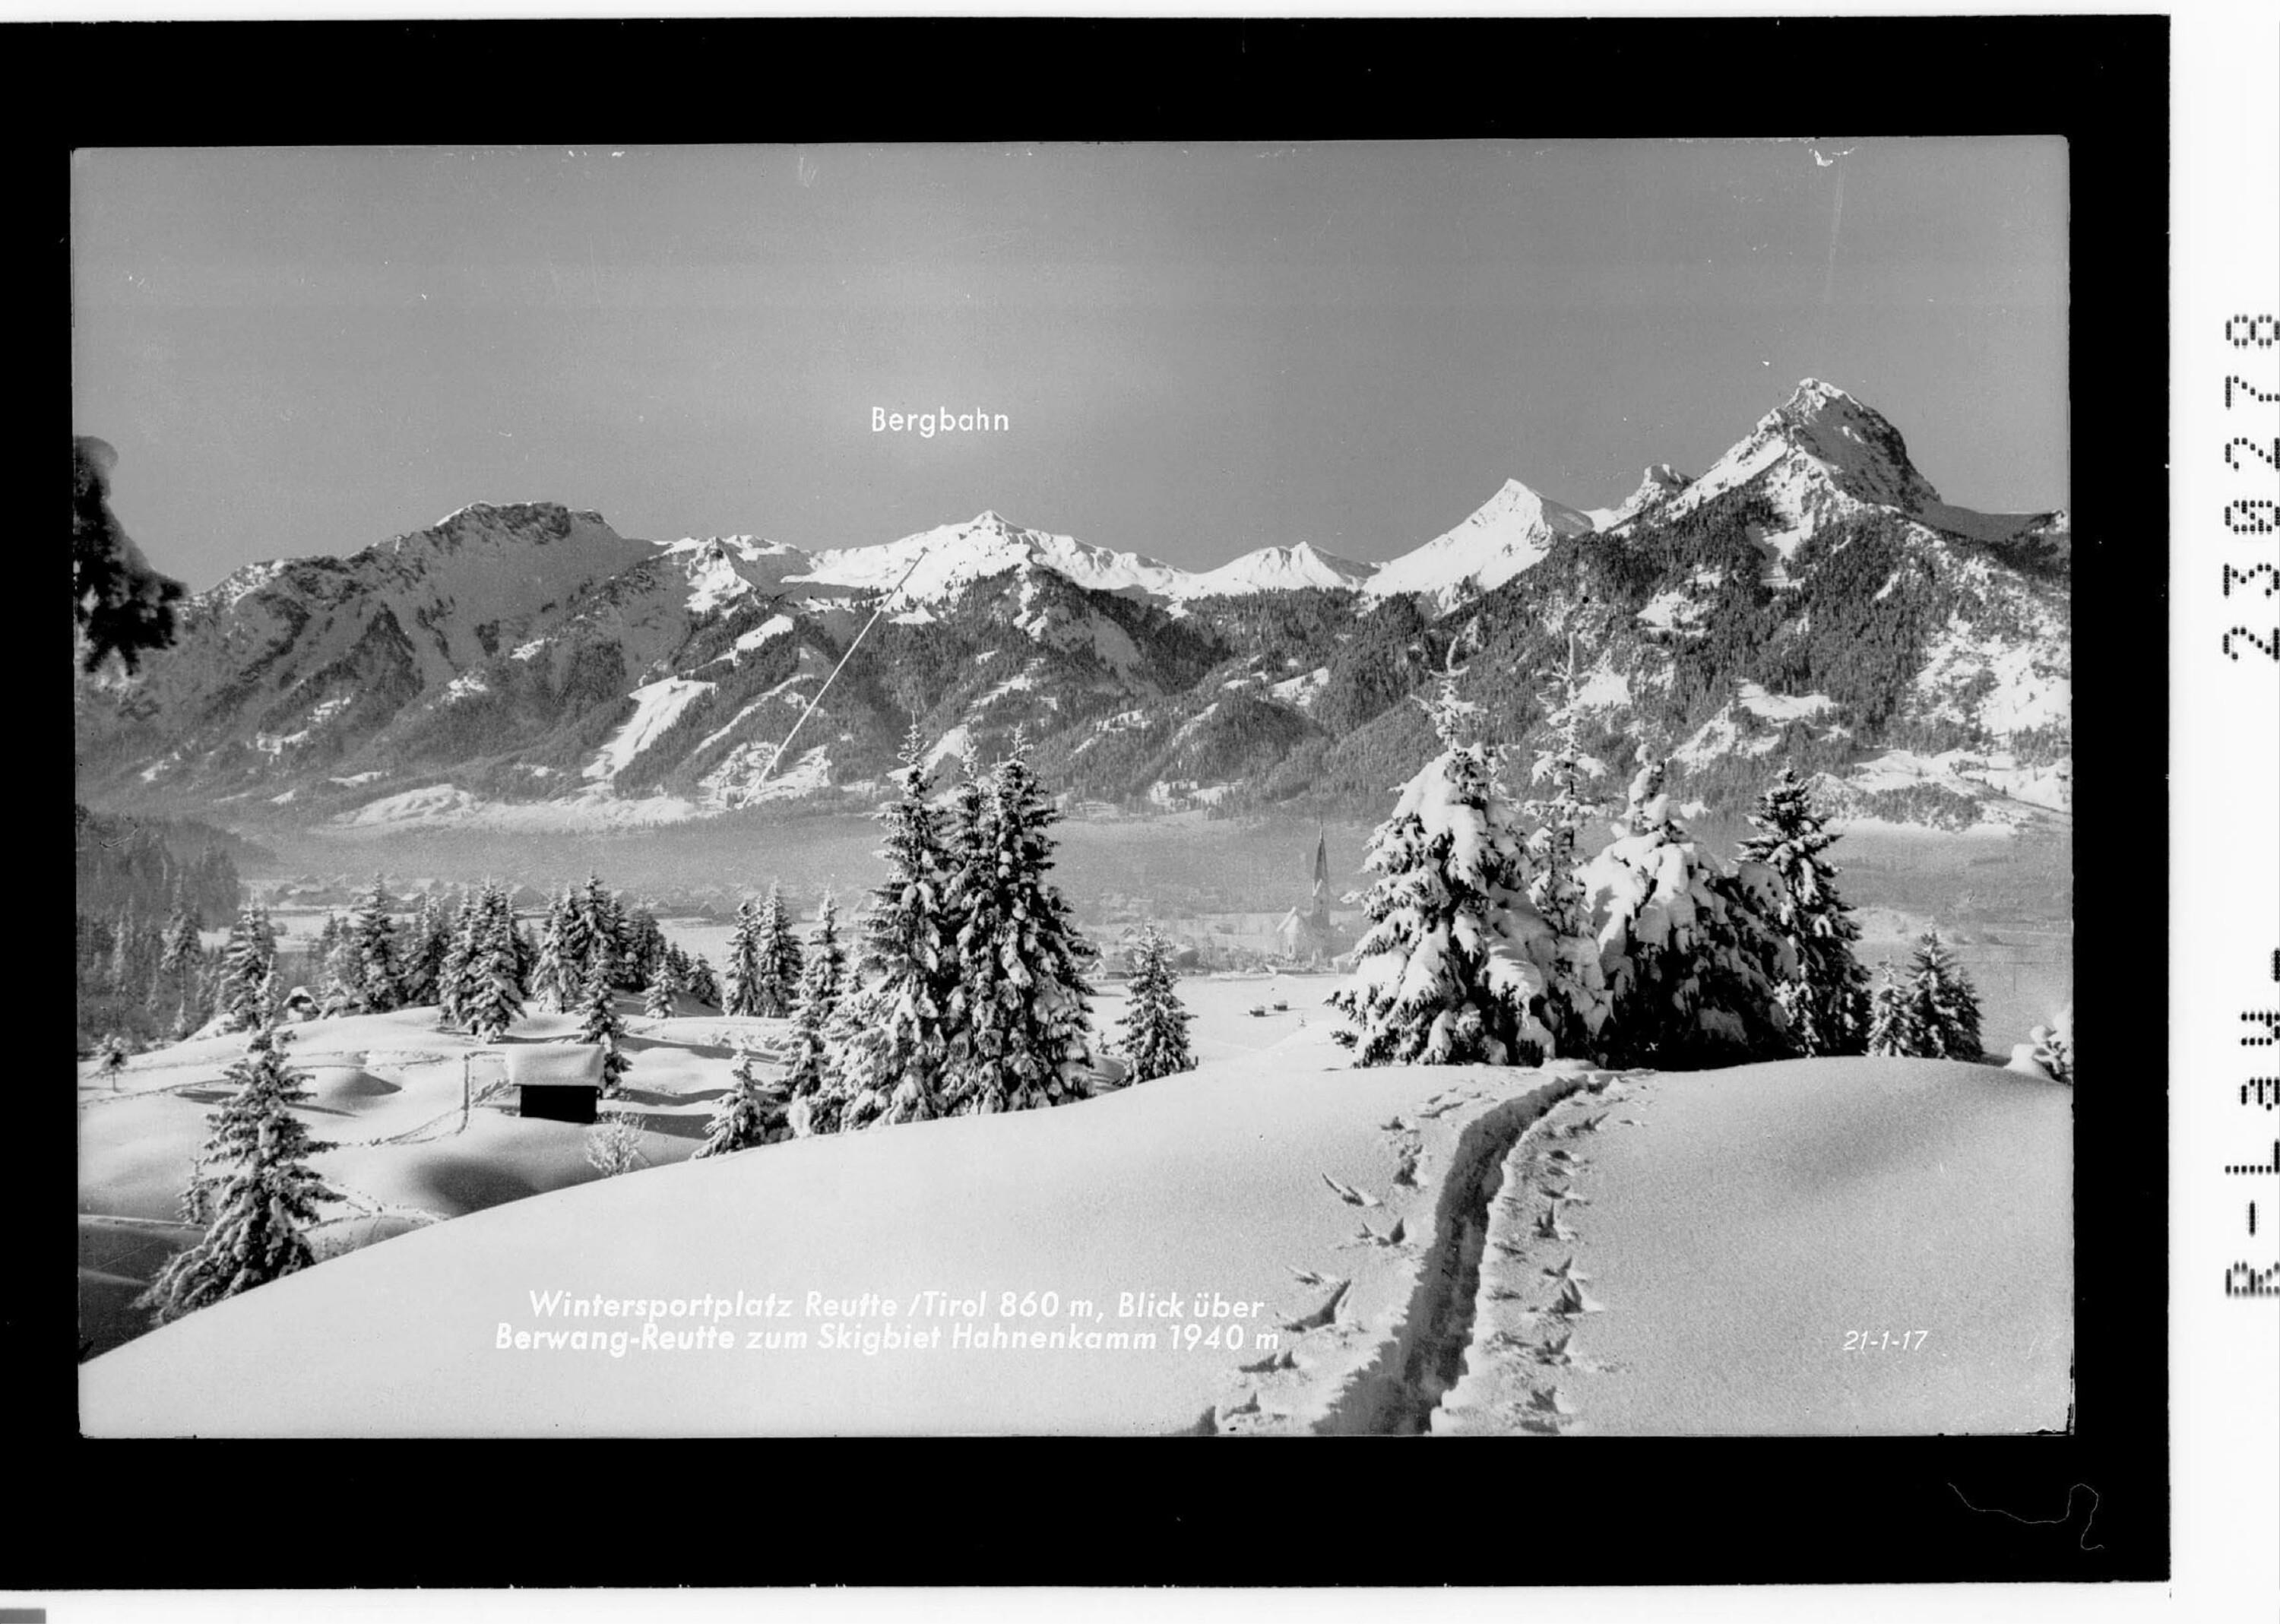 Wintersportplatz Reutte / Tirol 860 m / Blick über Berwang - Reutte zum Skigebiet Hahnenkamm 1940 m></div>


    <hr>
    <div class=